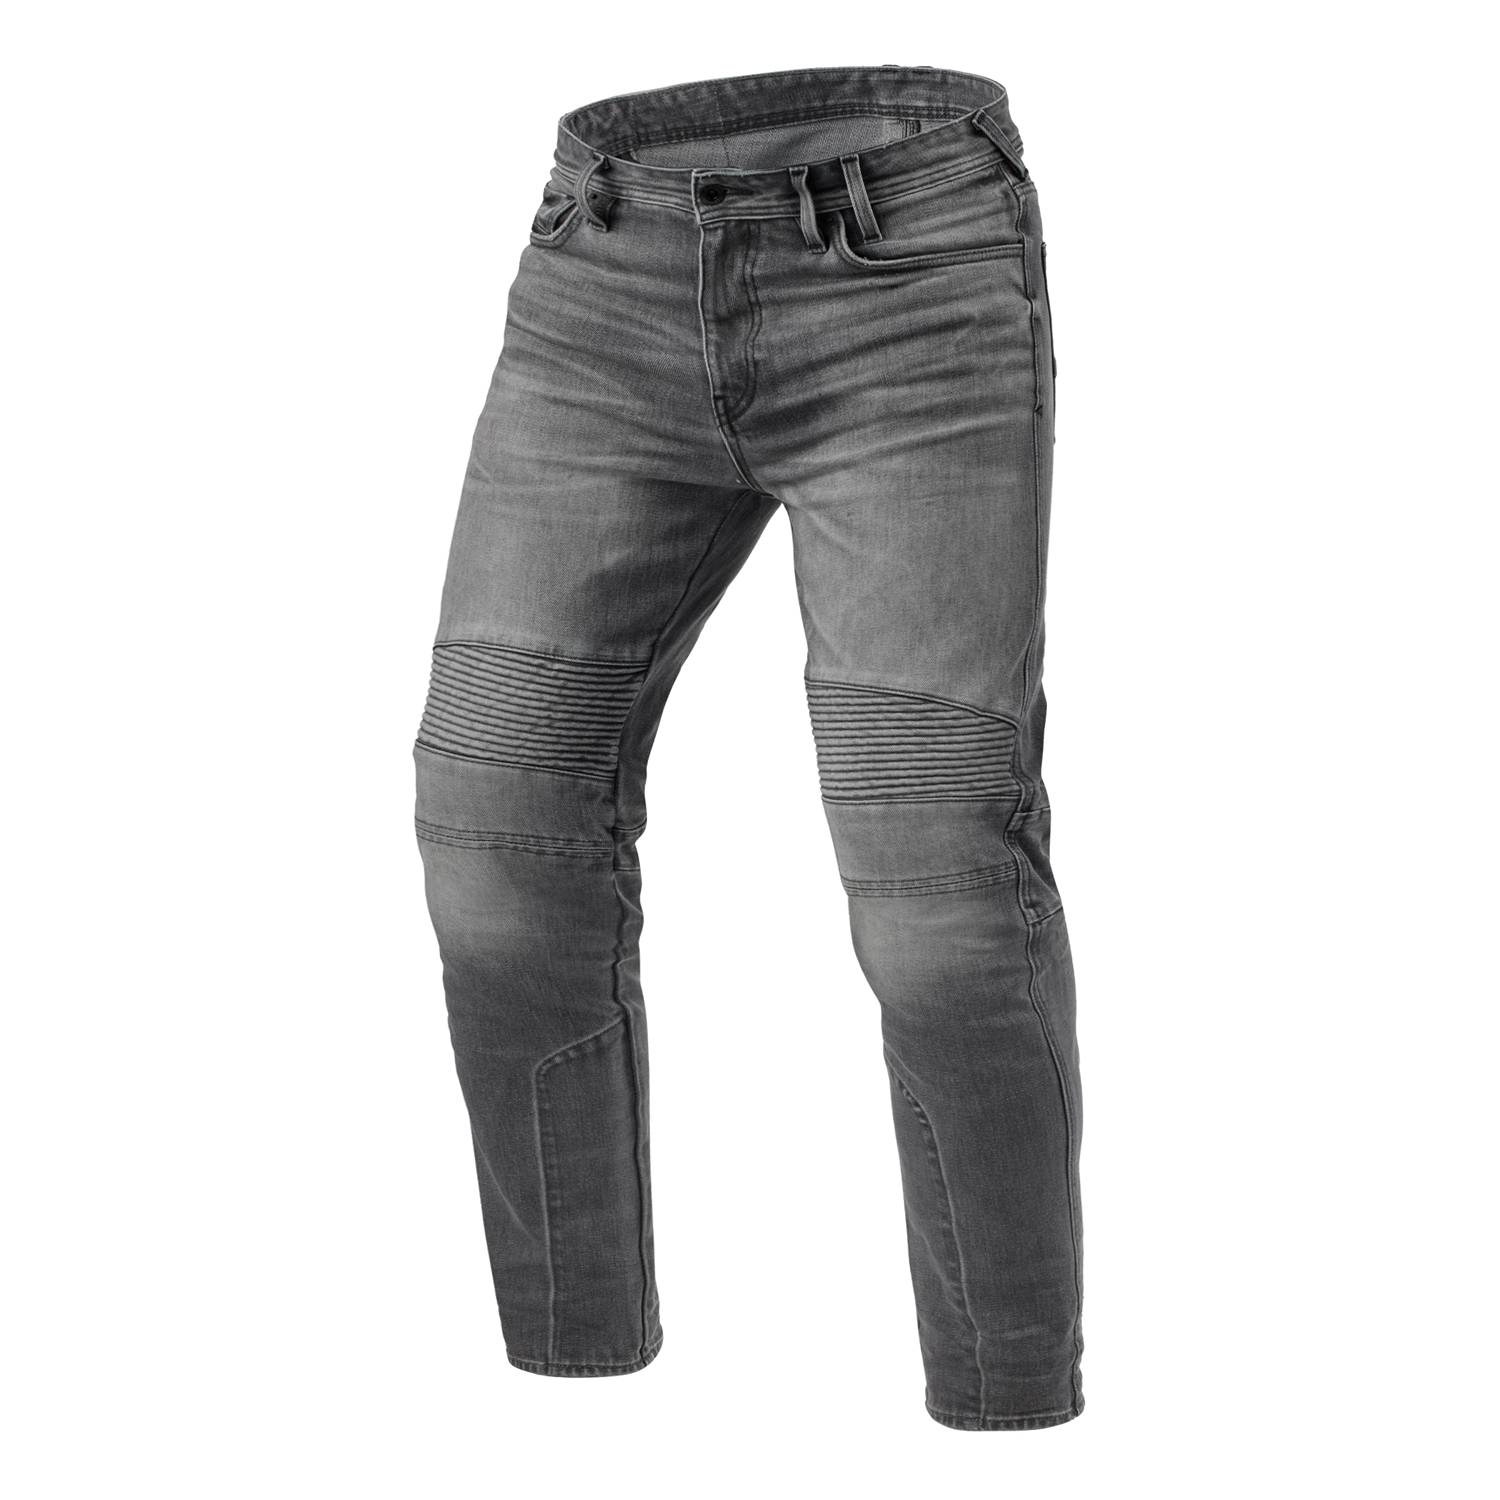 Image of REV'IT! Jeans Moto 2 TF Medium Grey Used L36 Motorcycle Jeans Talla L36/W30